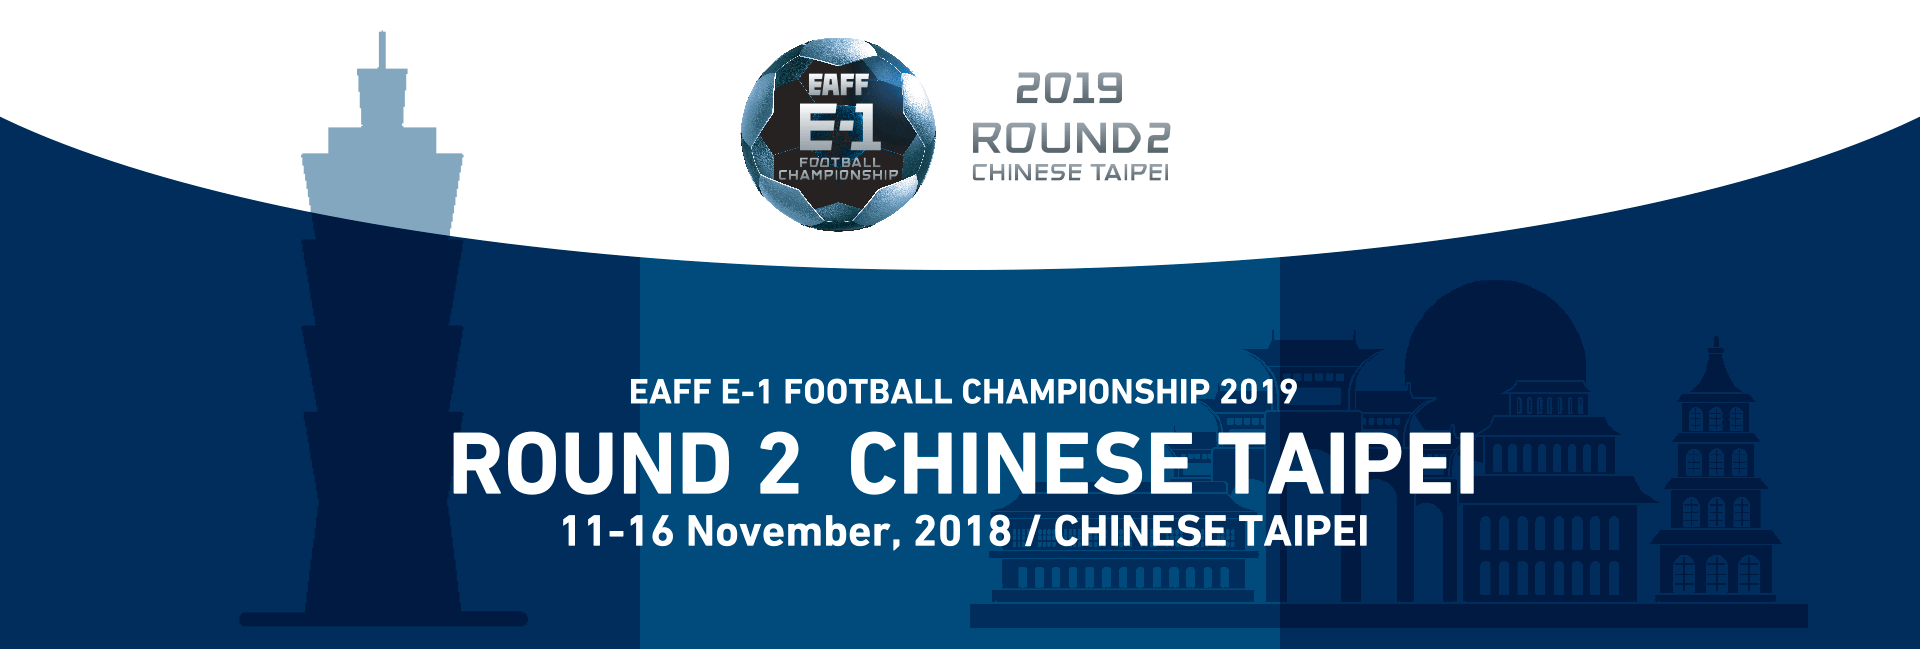 EAFF E-1 Football Championship 2019 Preliminary Round 2 Chinese Taipei